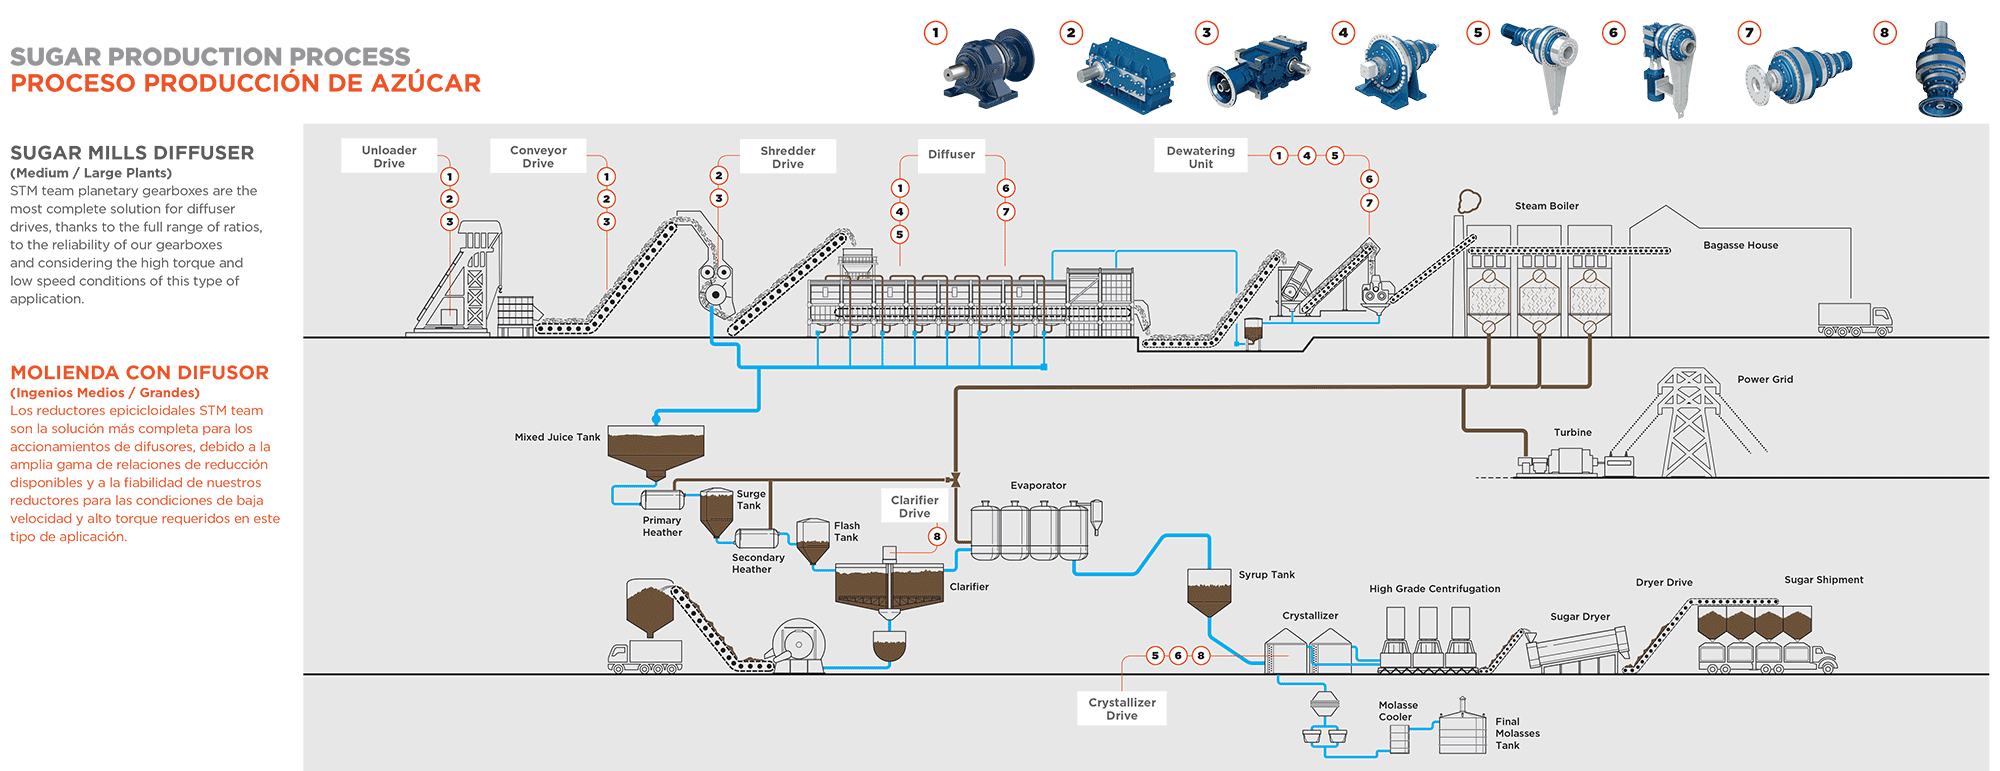 sugar production process flusso sugar mills diffuser